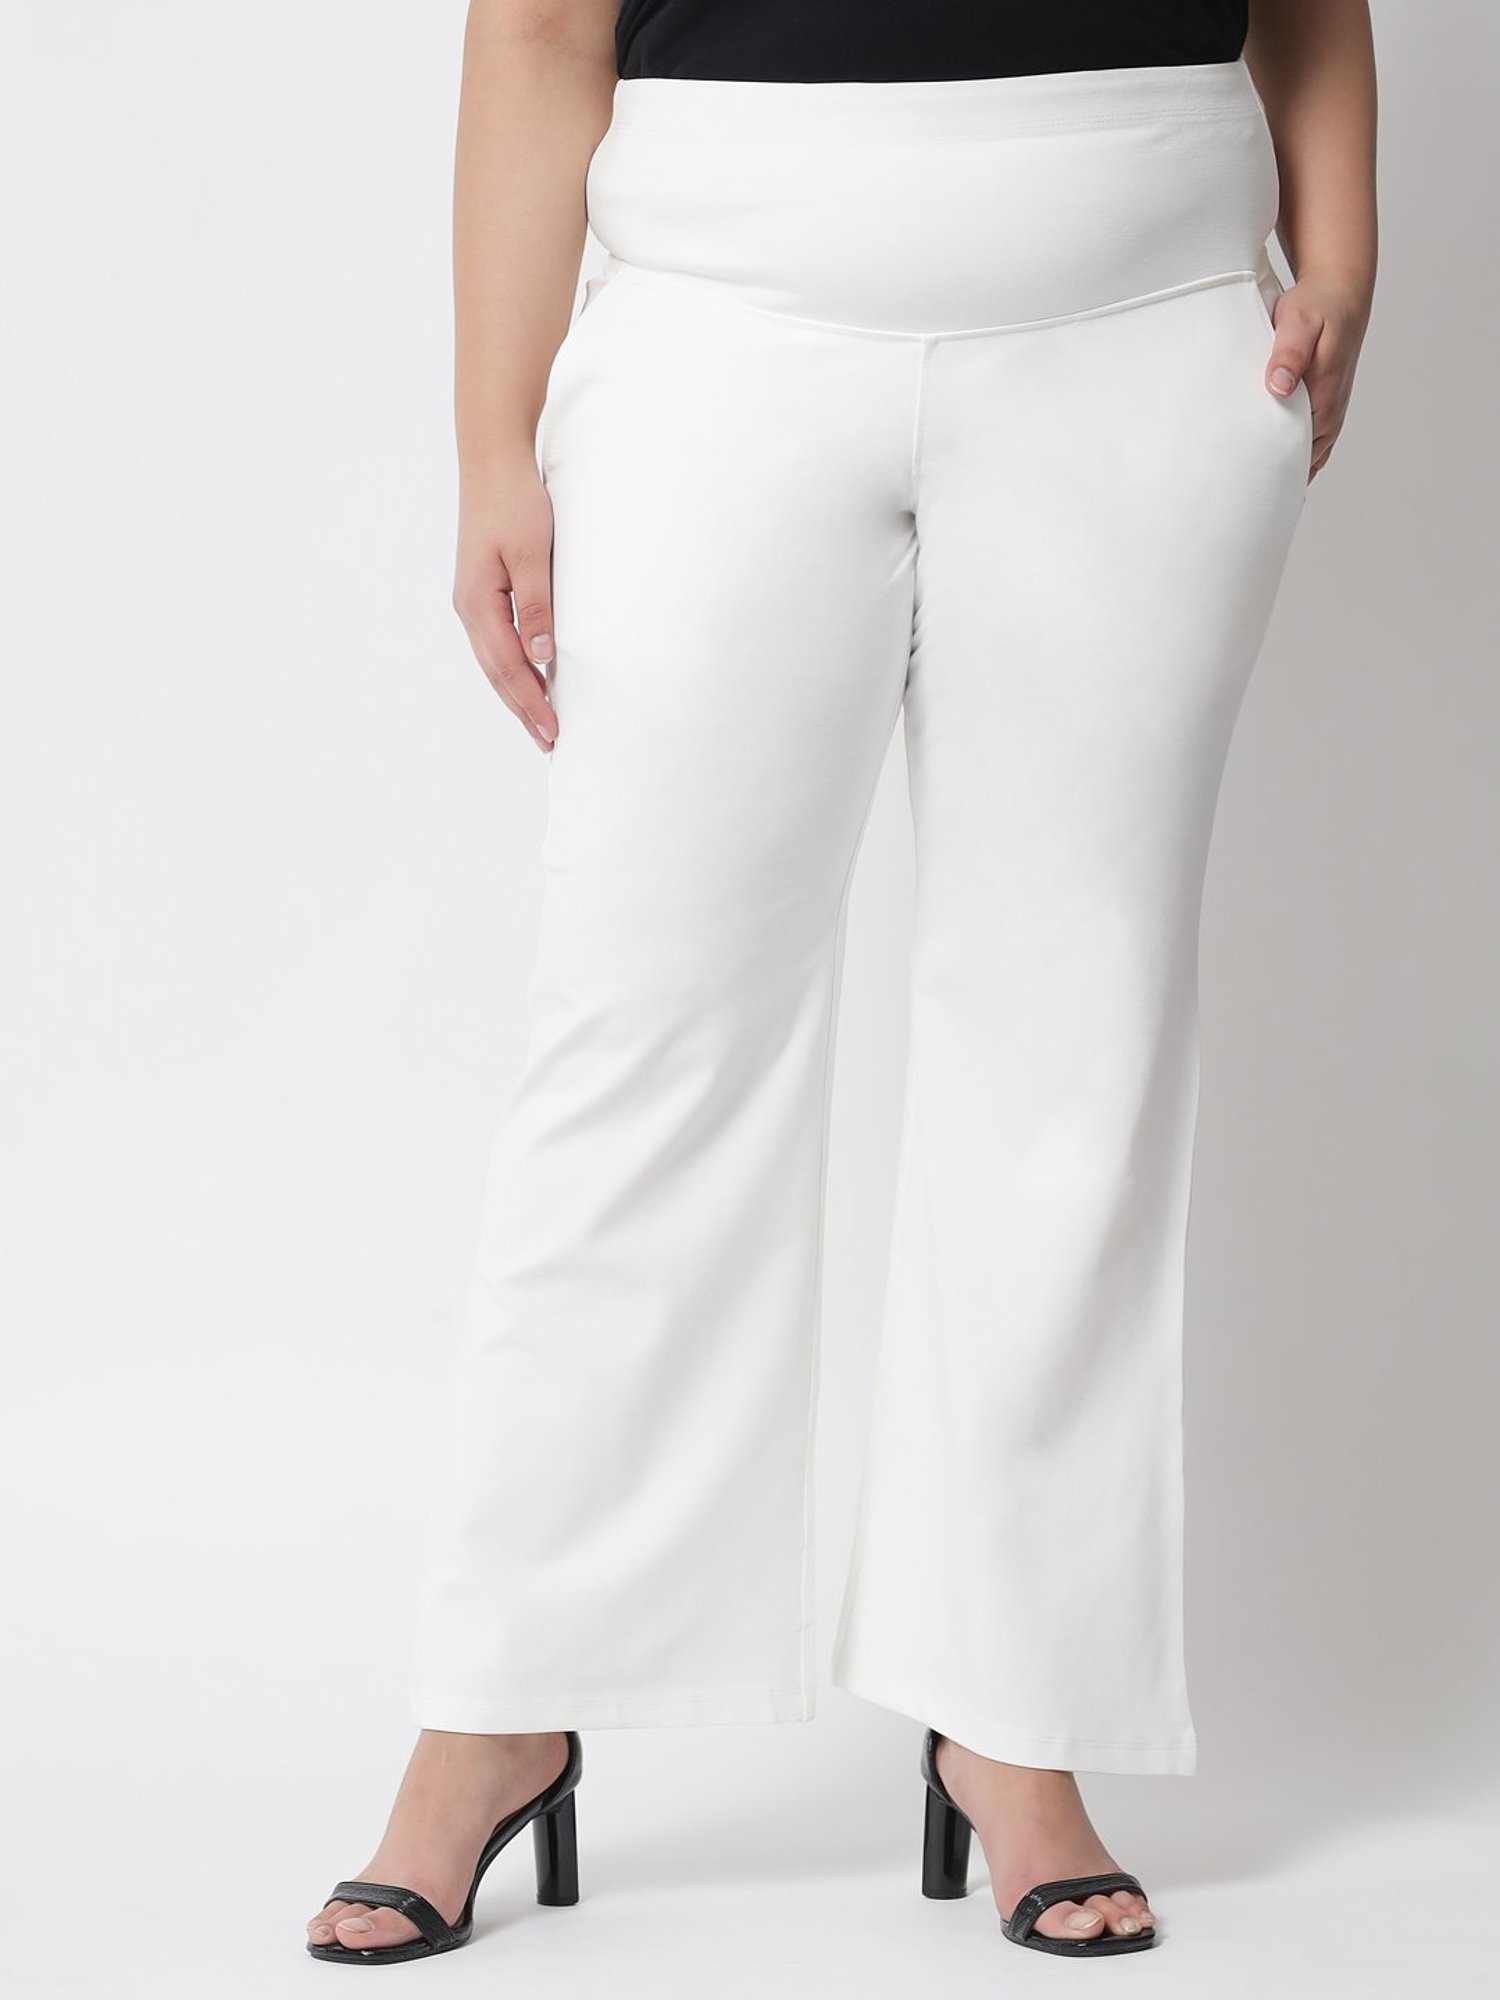 Buy Amydus Red  White Check Regular Fit Pants for Womens Online  Tata  CLiQ